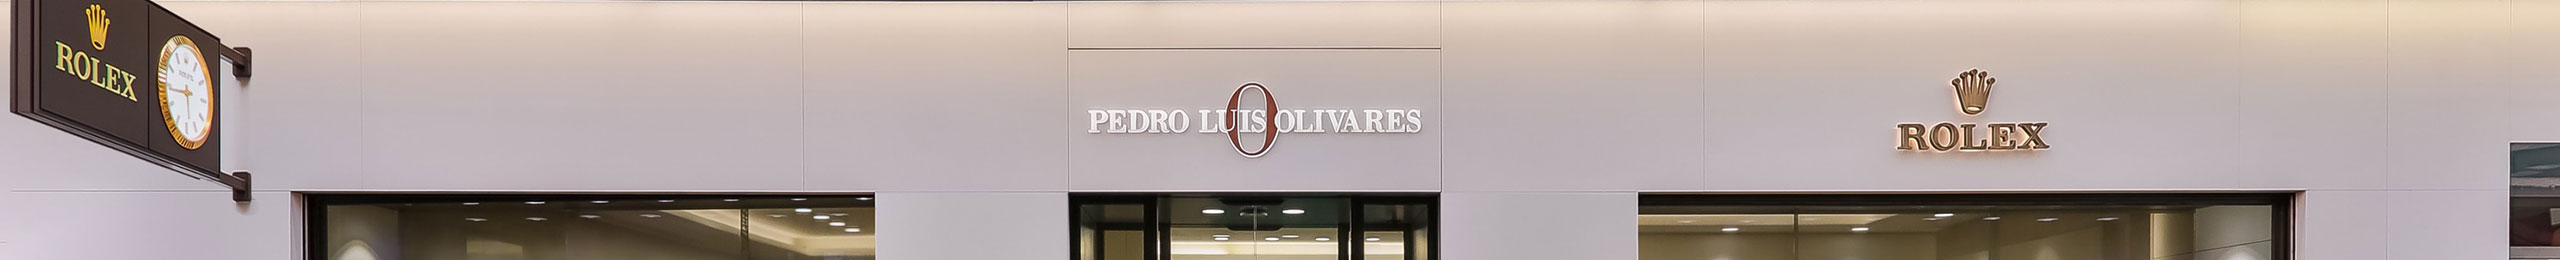 Rolex Official Retailer Jewelry Facade - Pedro Luis Olivares Jewelry in Murcia